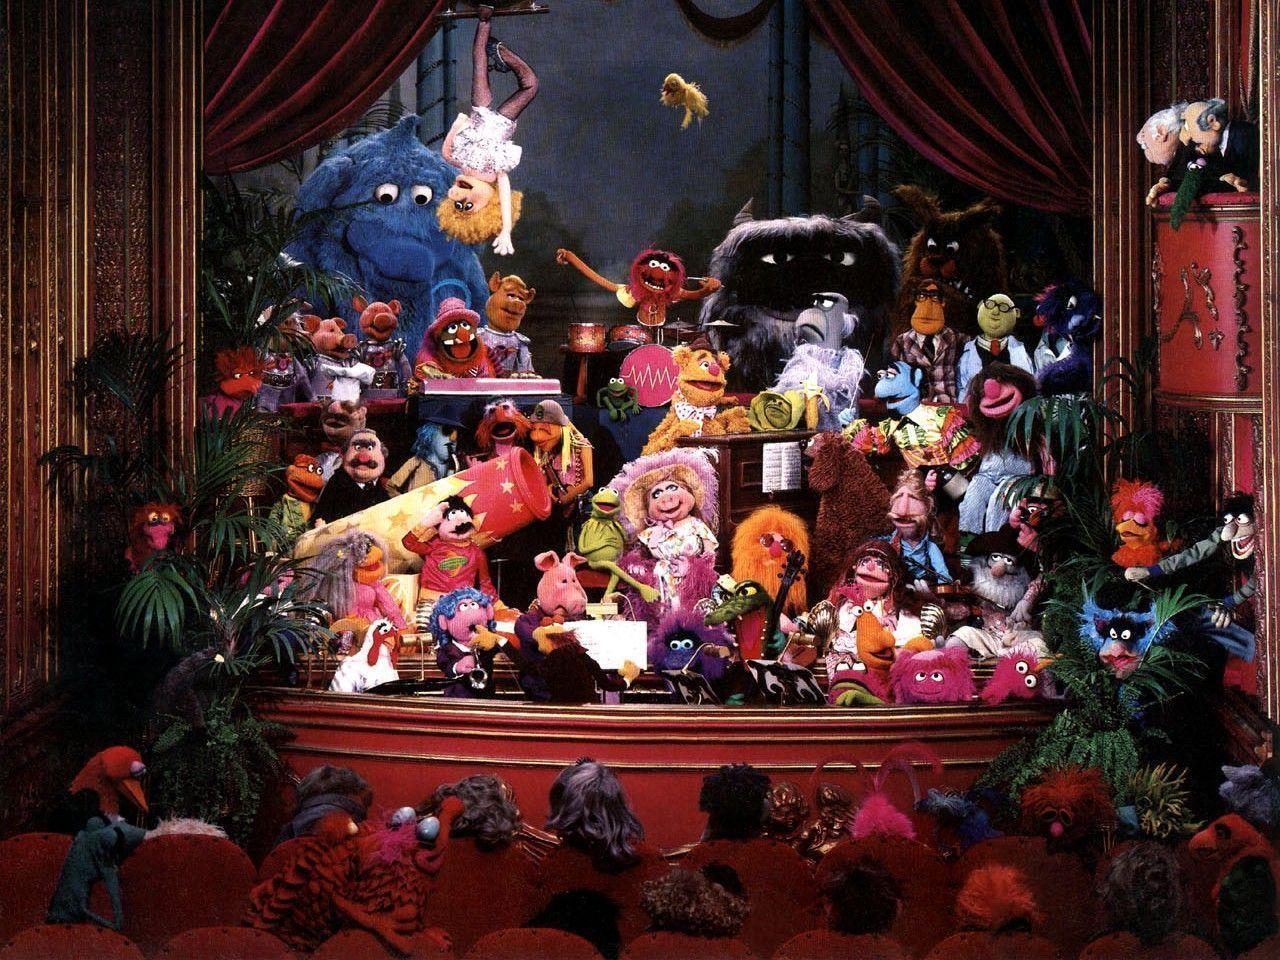 The Muppet Show Wallpaper (1280 x 960 Pixels)